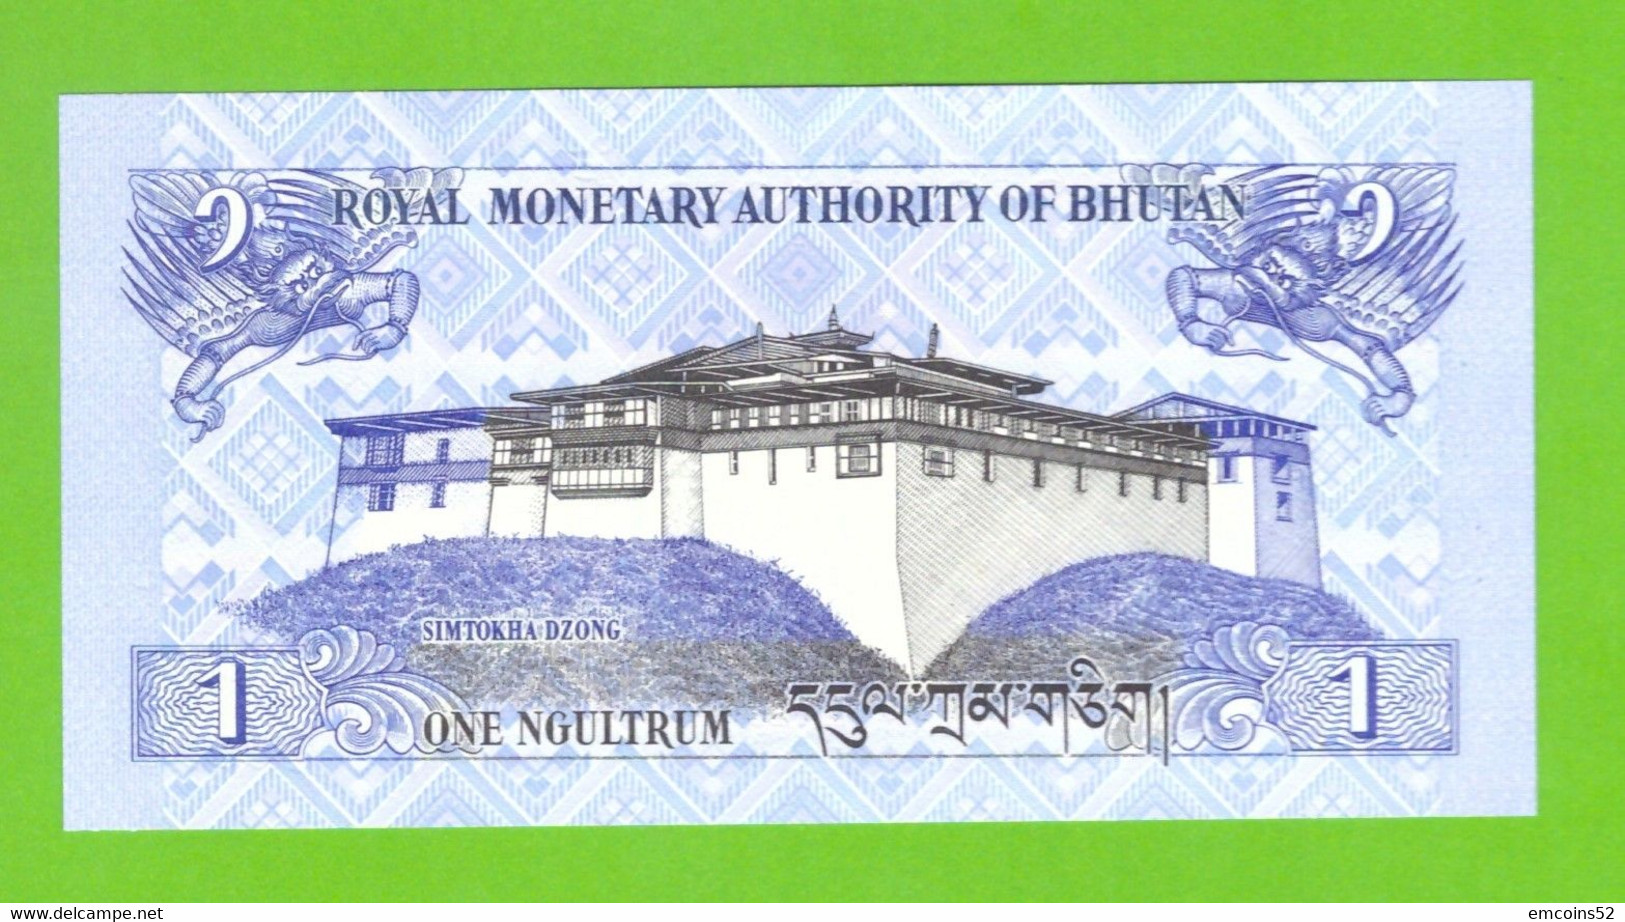 BHUTAN 1 NGULTRUM 2006 P-27  UNC - Bhutan